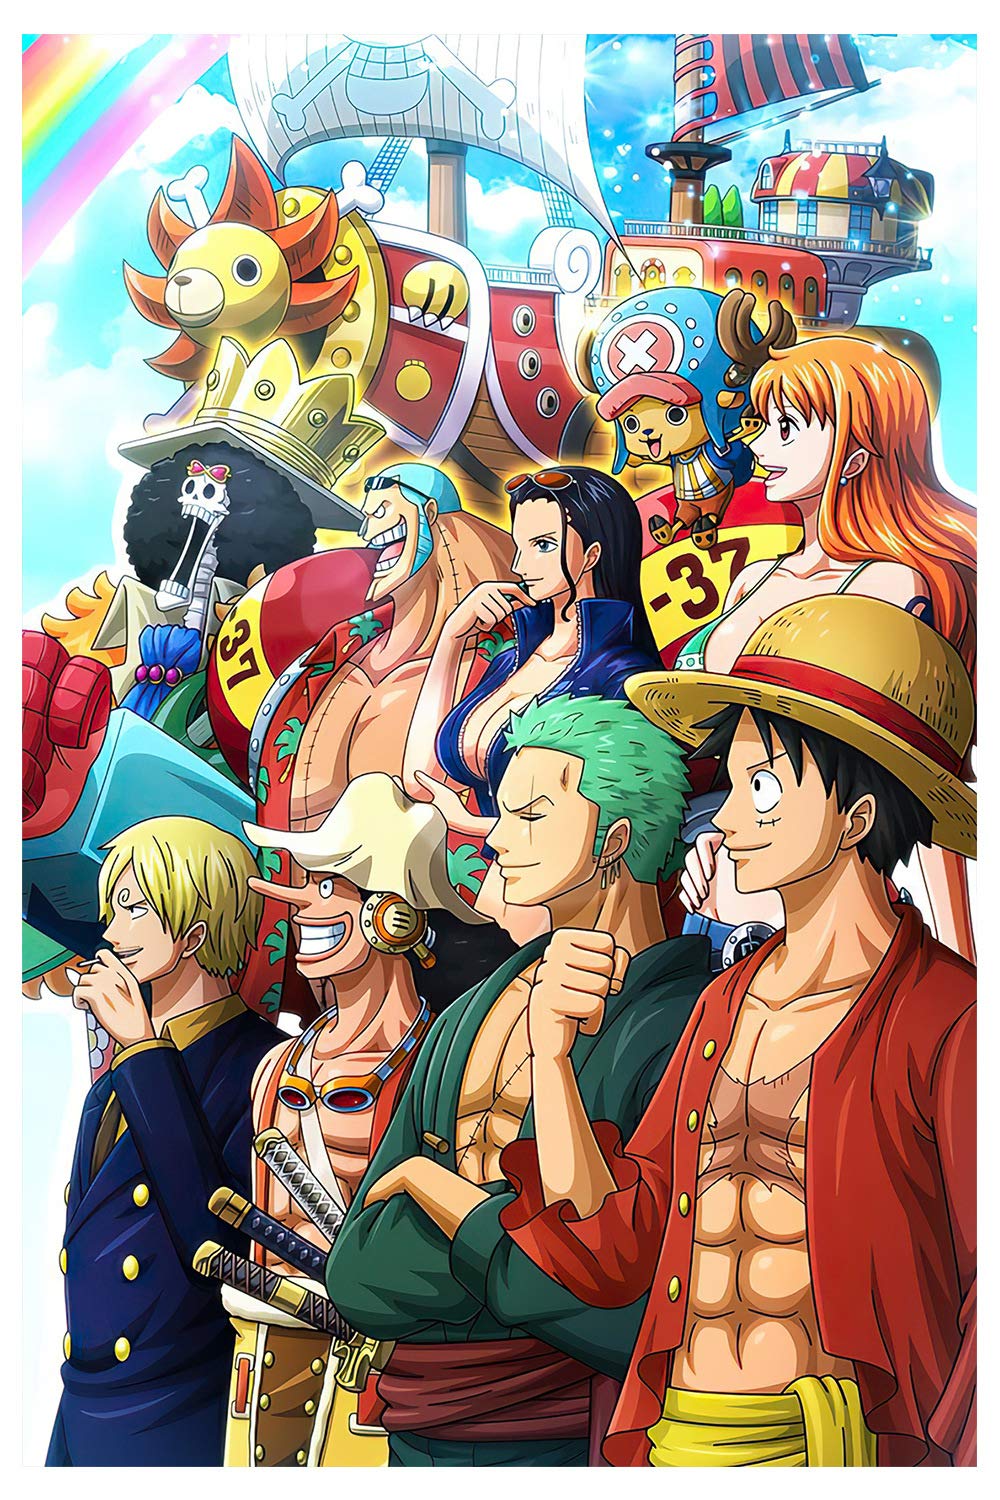 One Piece chapter 1082 spoilers leak early as manga takes GW hiatus